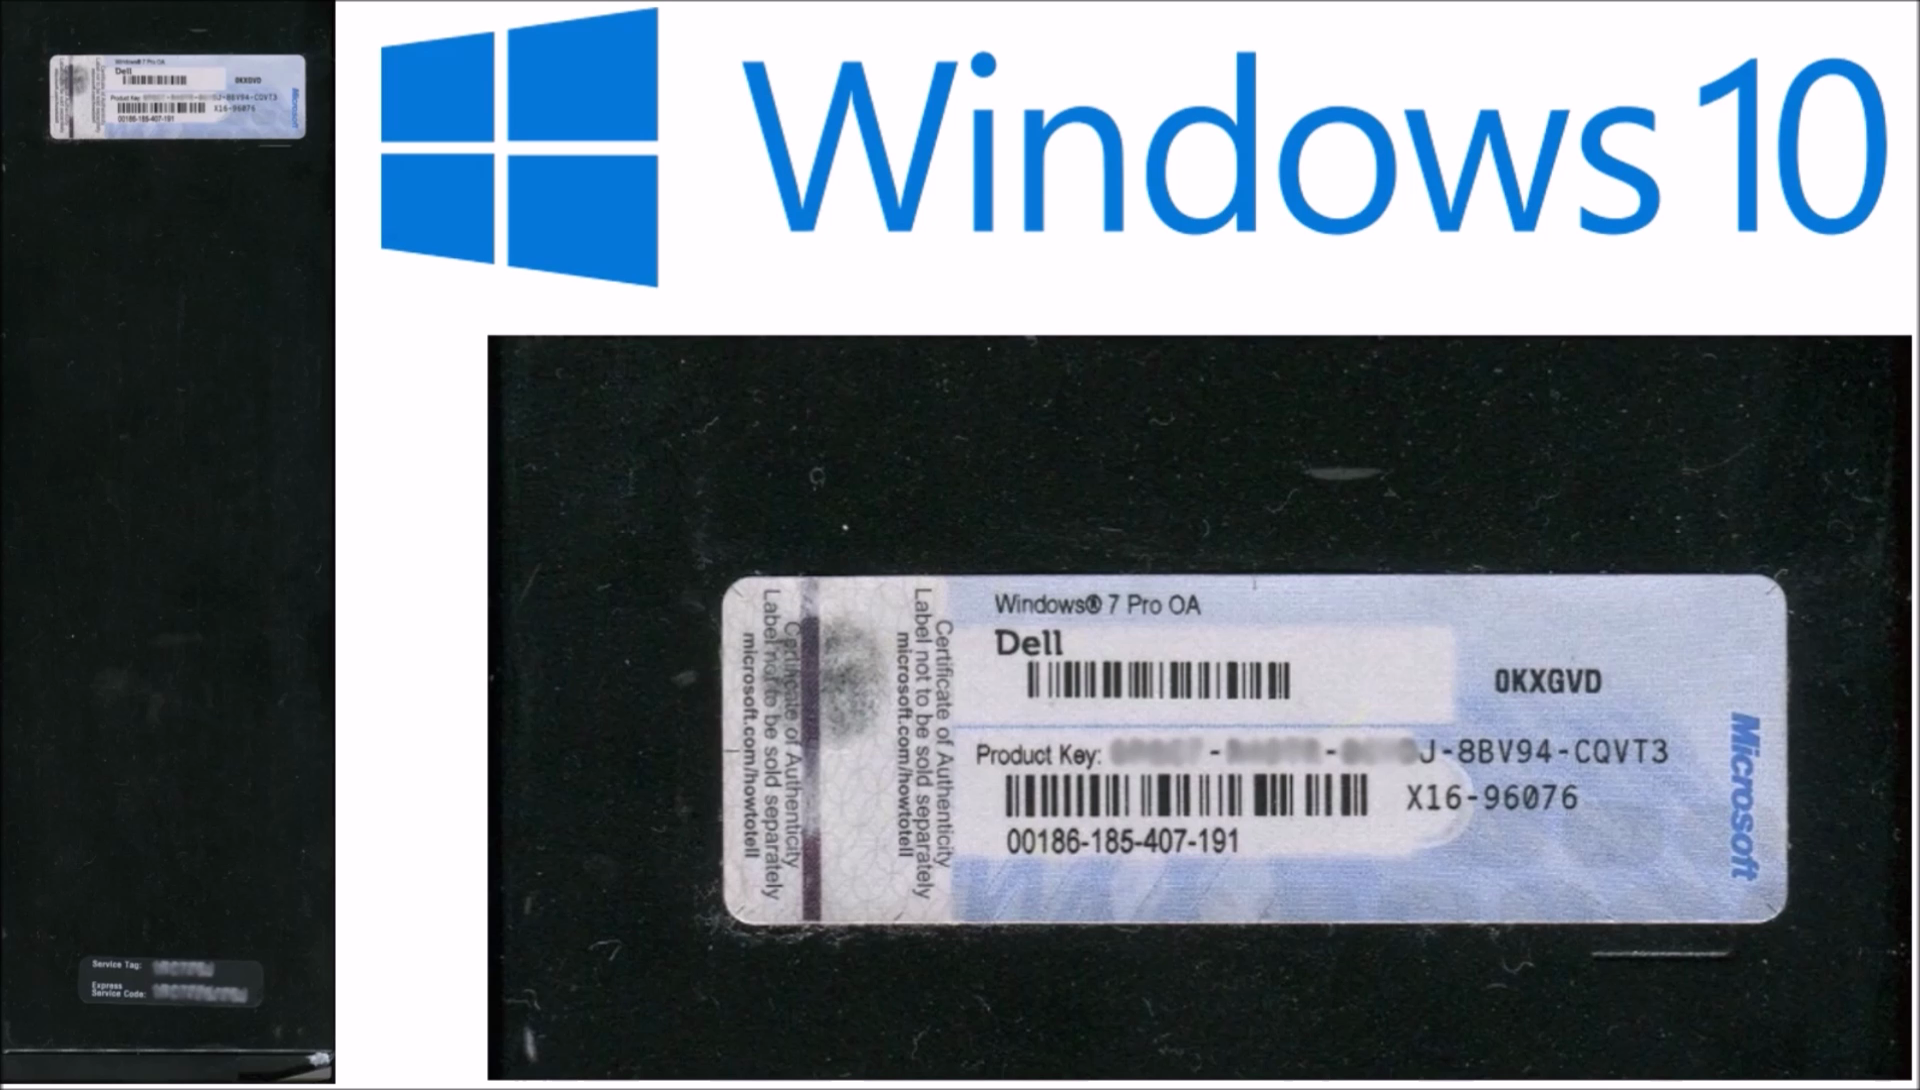 windows 10 pro license key instant